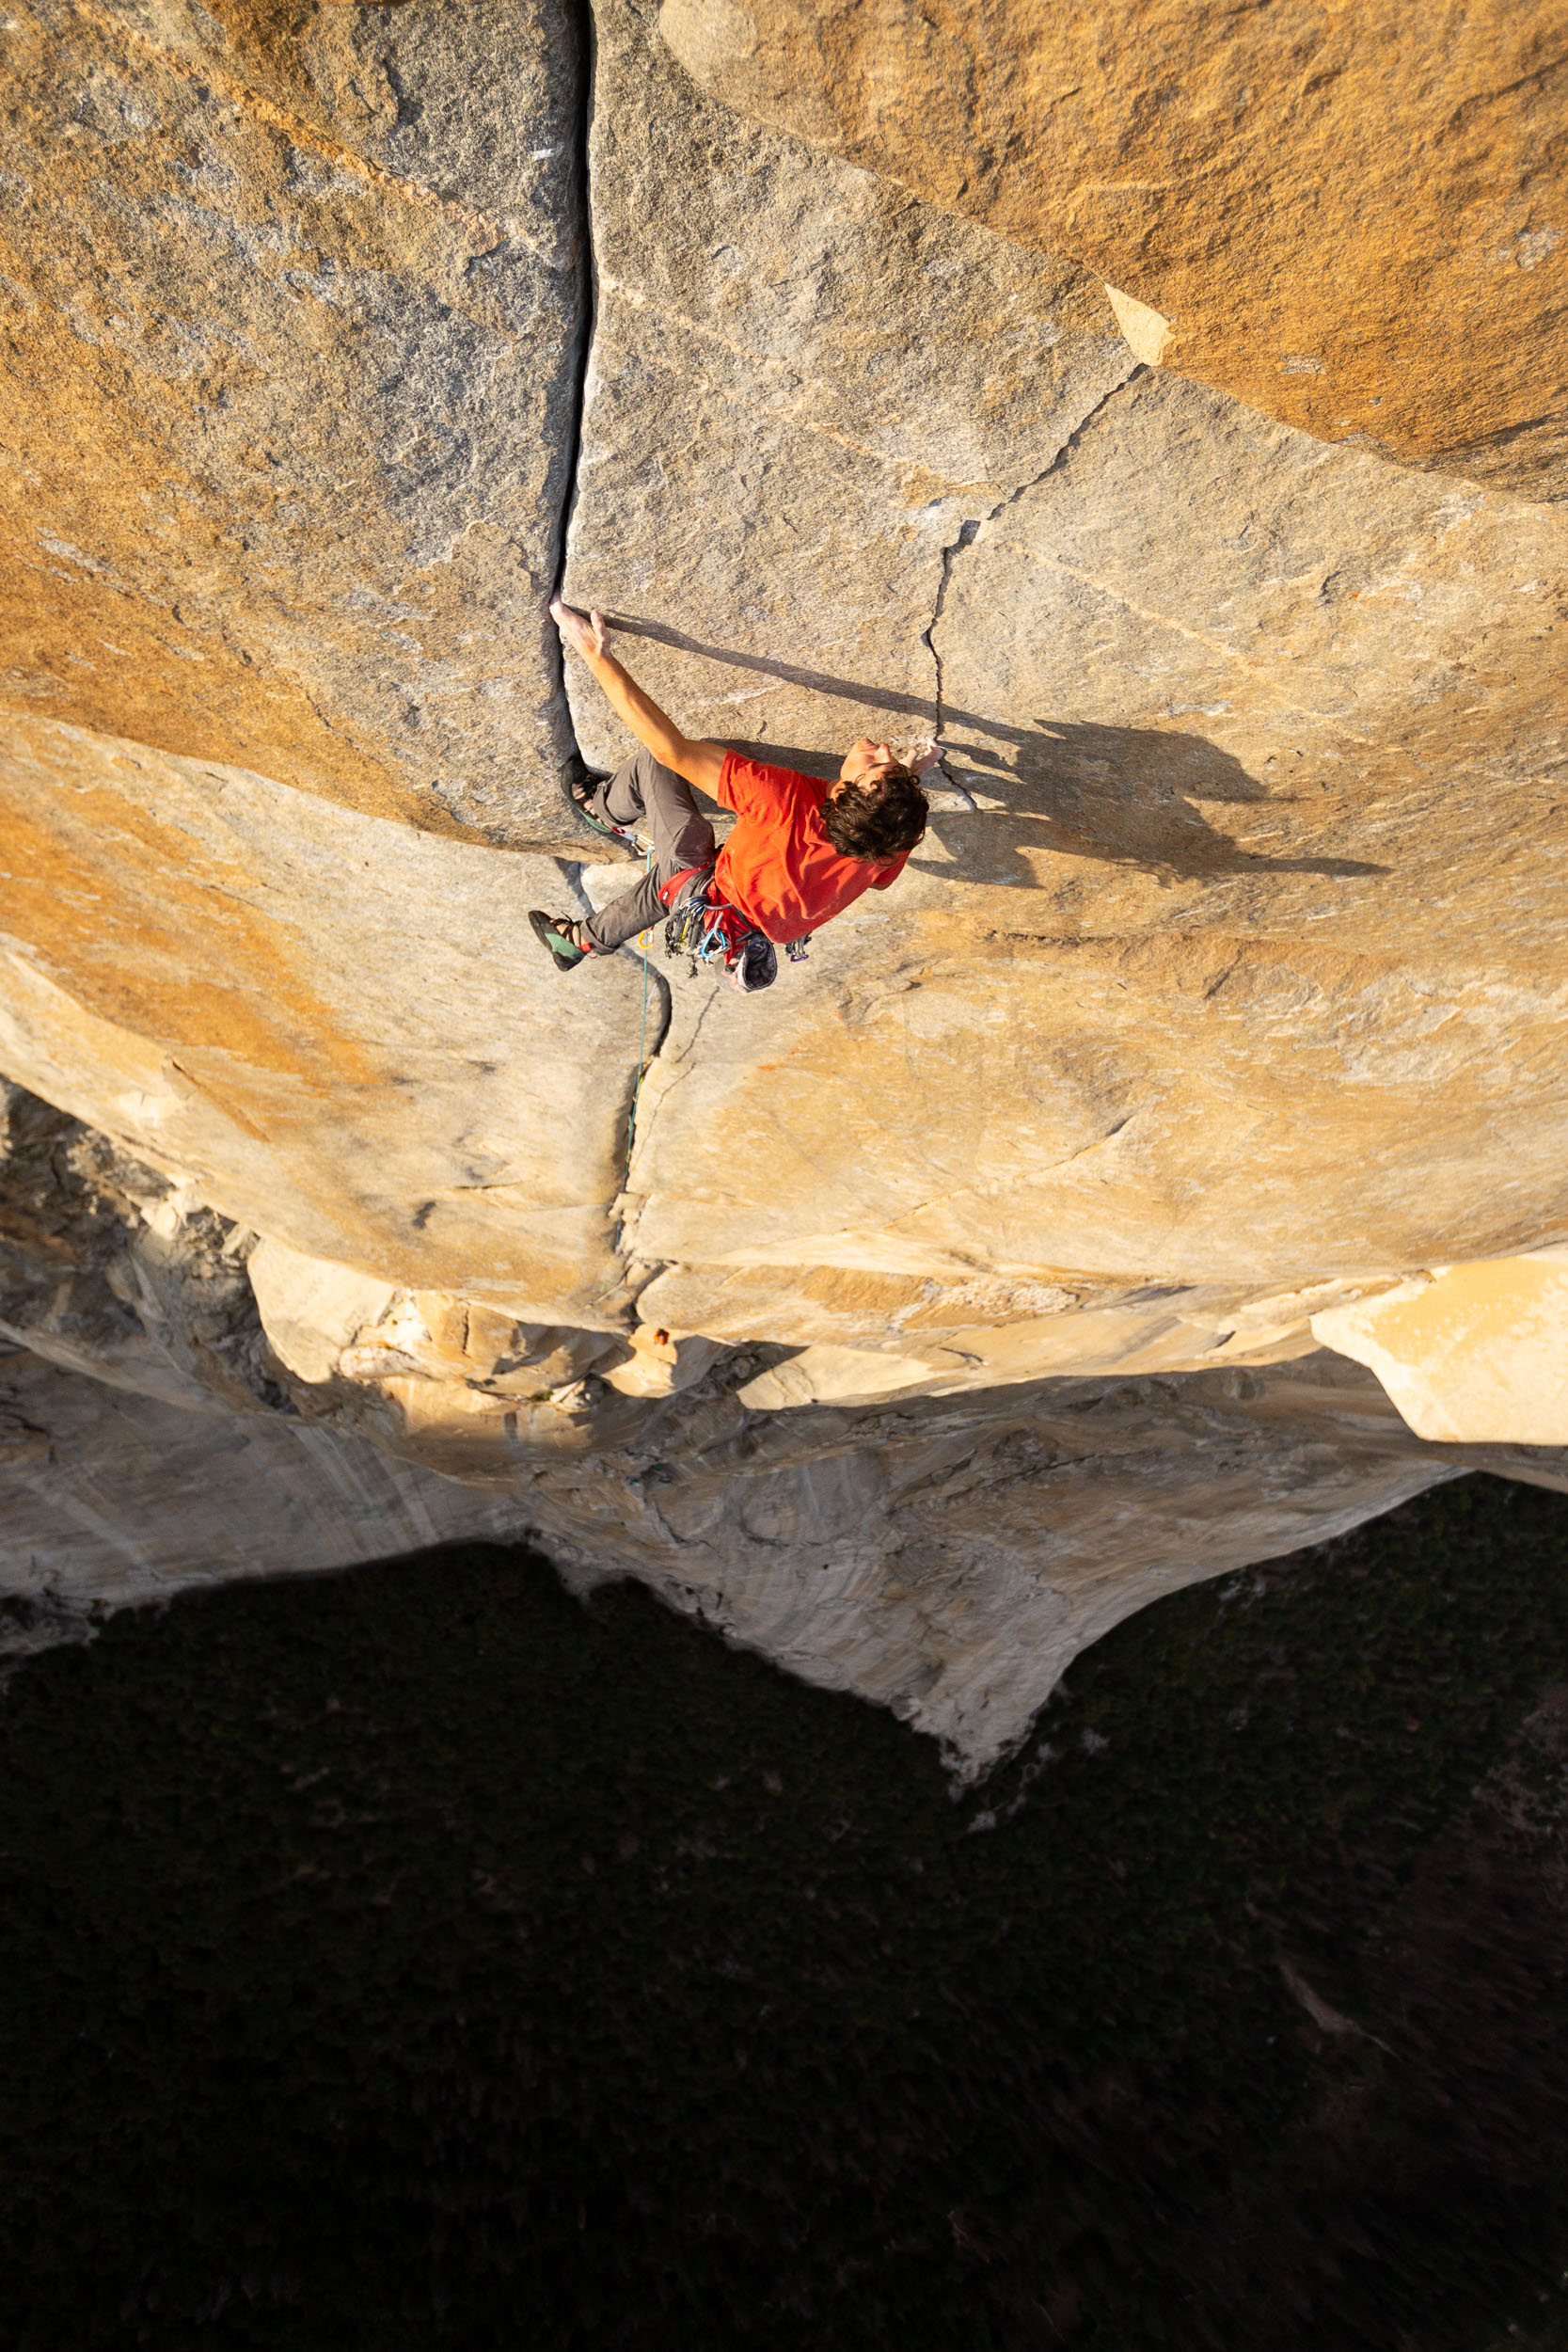  Brad Gobright climbing the Salathé Wall, El Capitan, 2018 